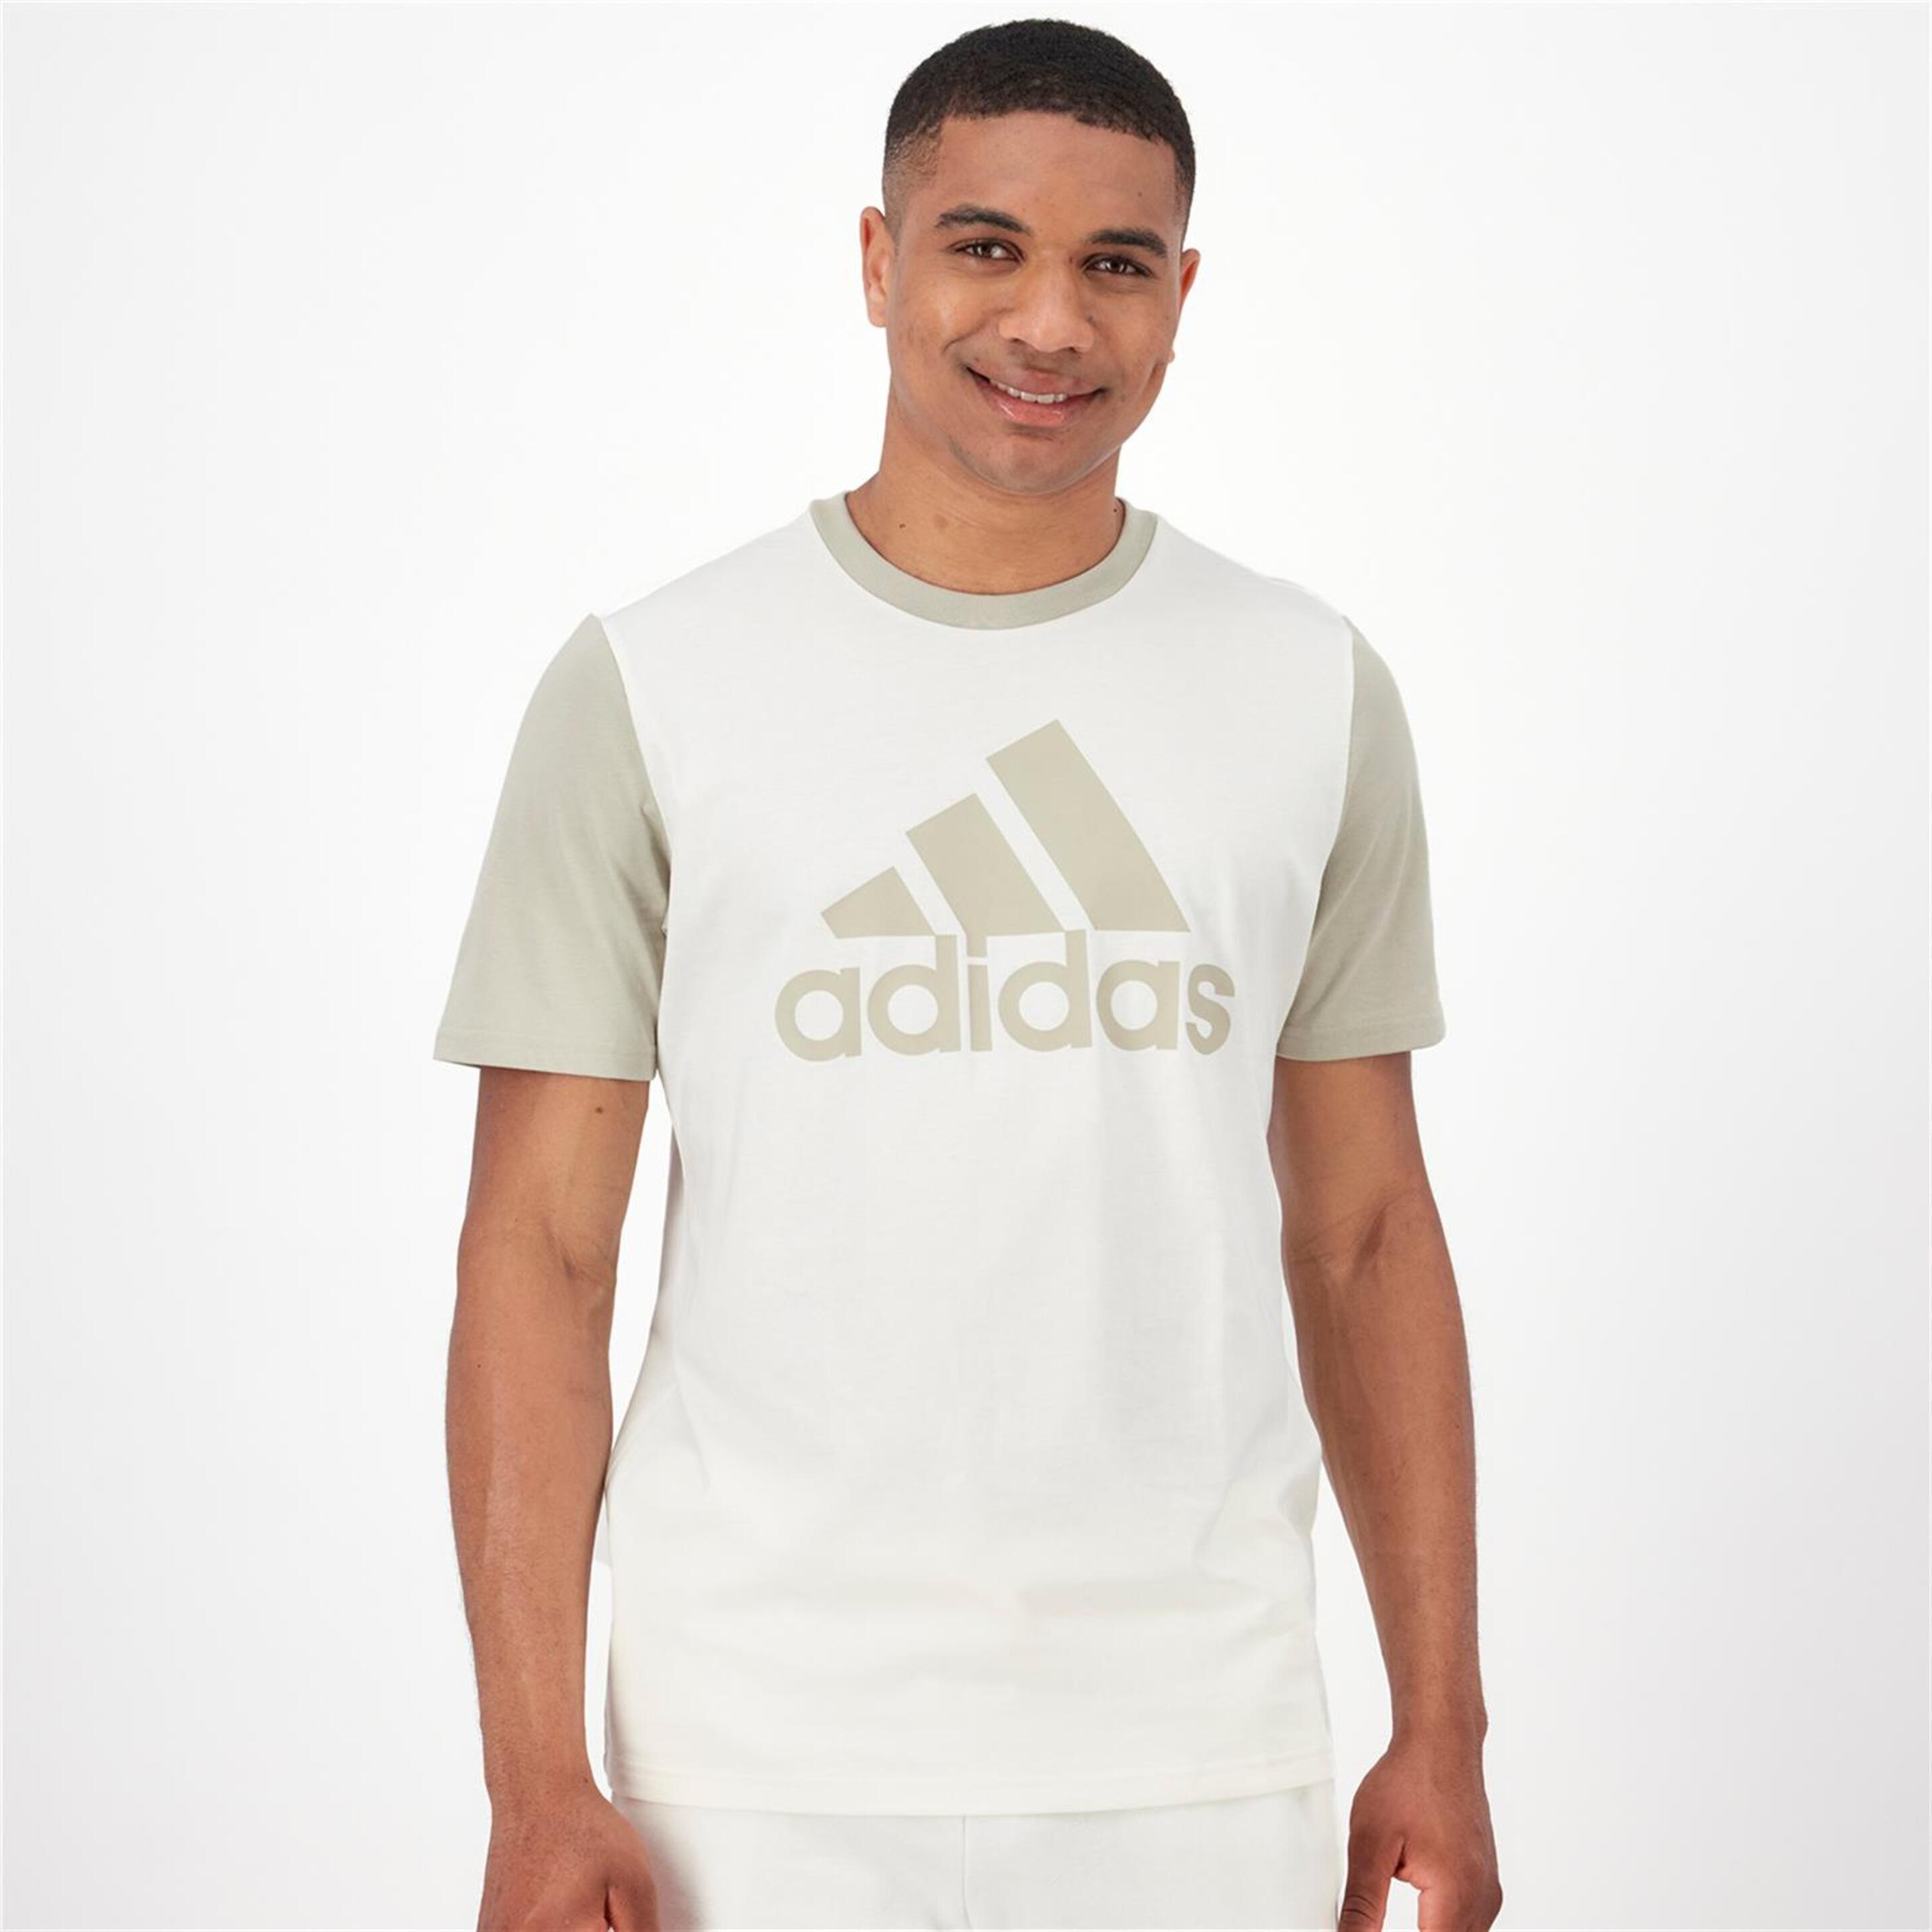 adidas 3s Multi - blanco - Camiseta Hombre